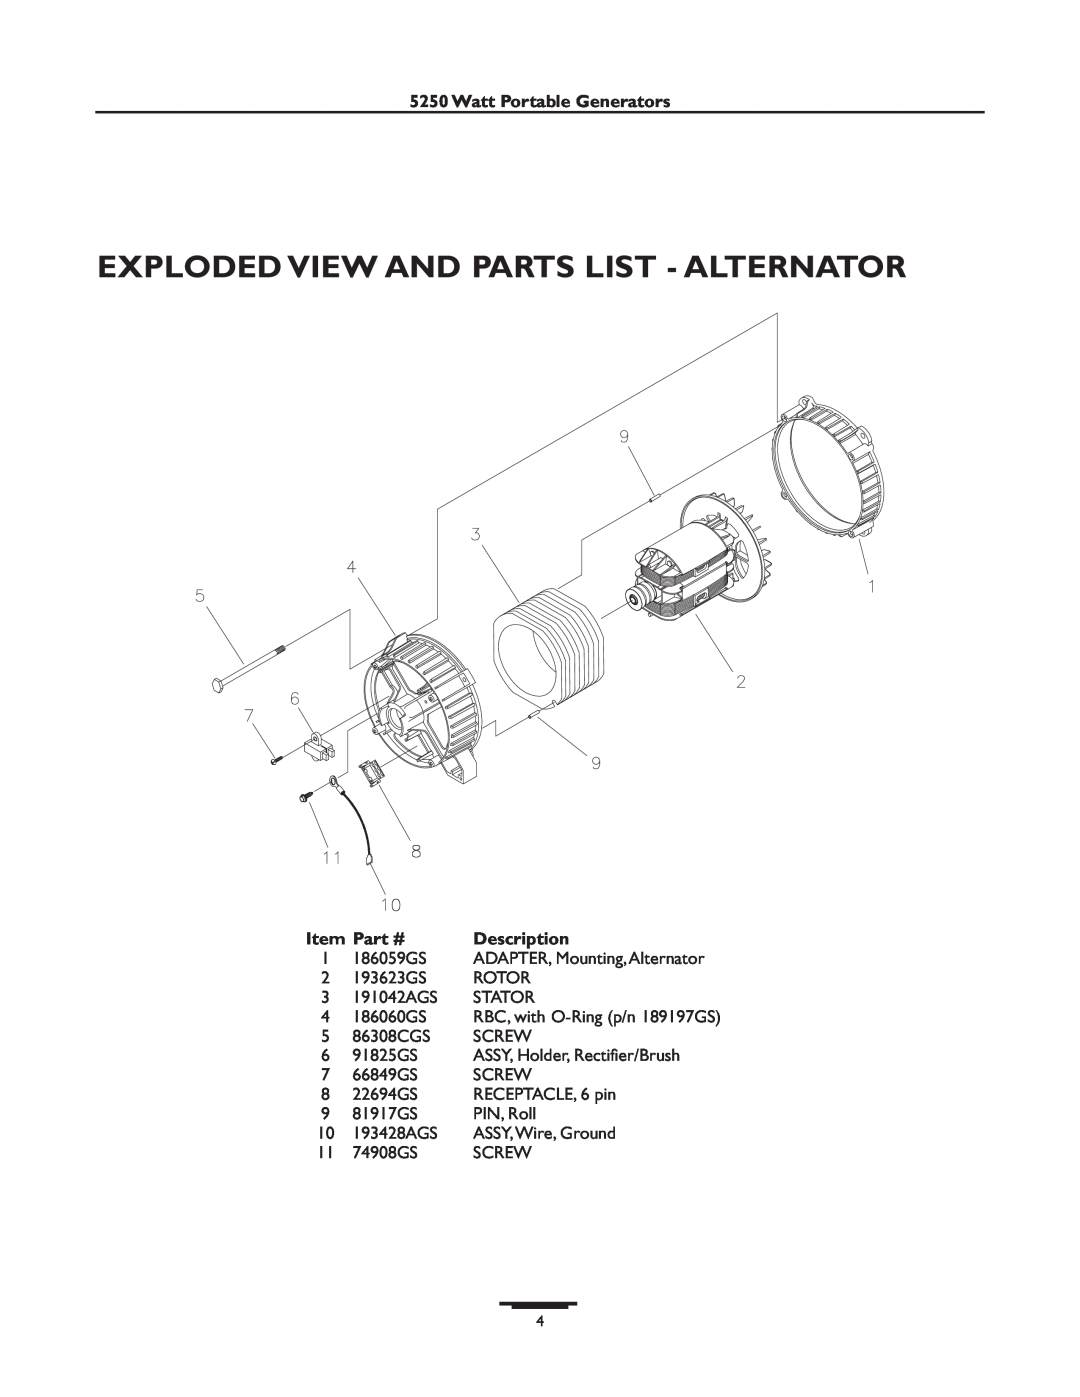 Briggs & Stratton 1971 manual Exploded View And Parts List - Alternator, Watt Portable Generators, Description 